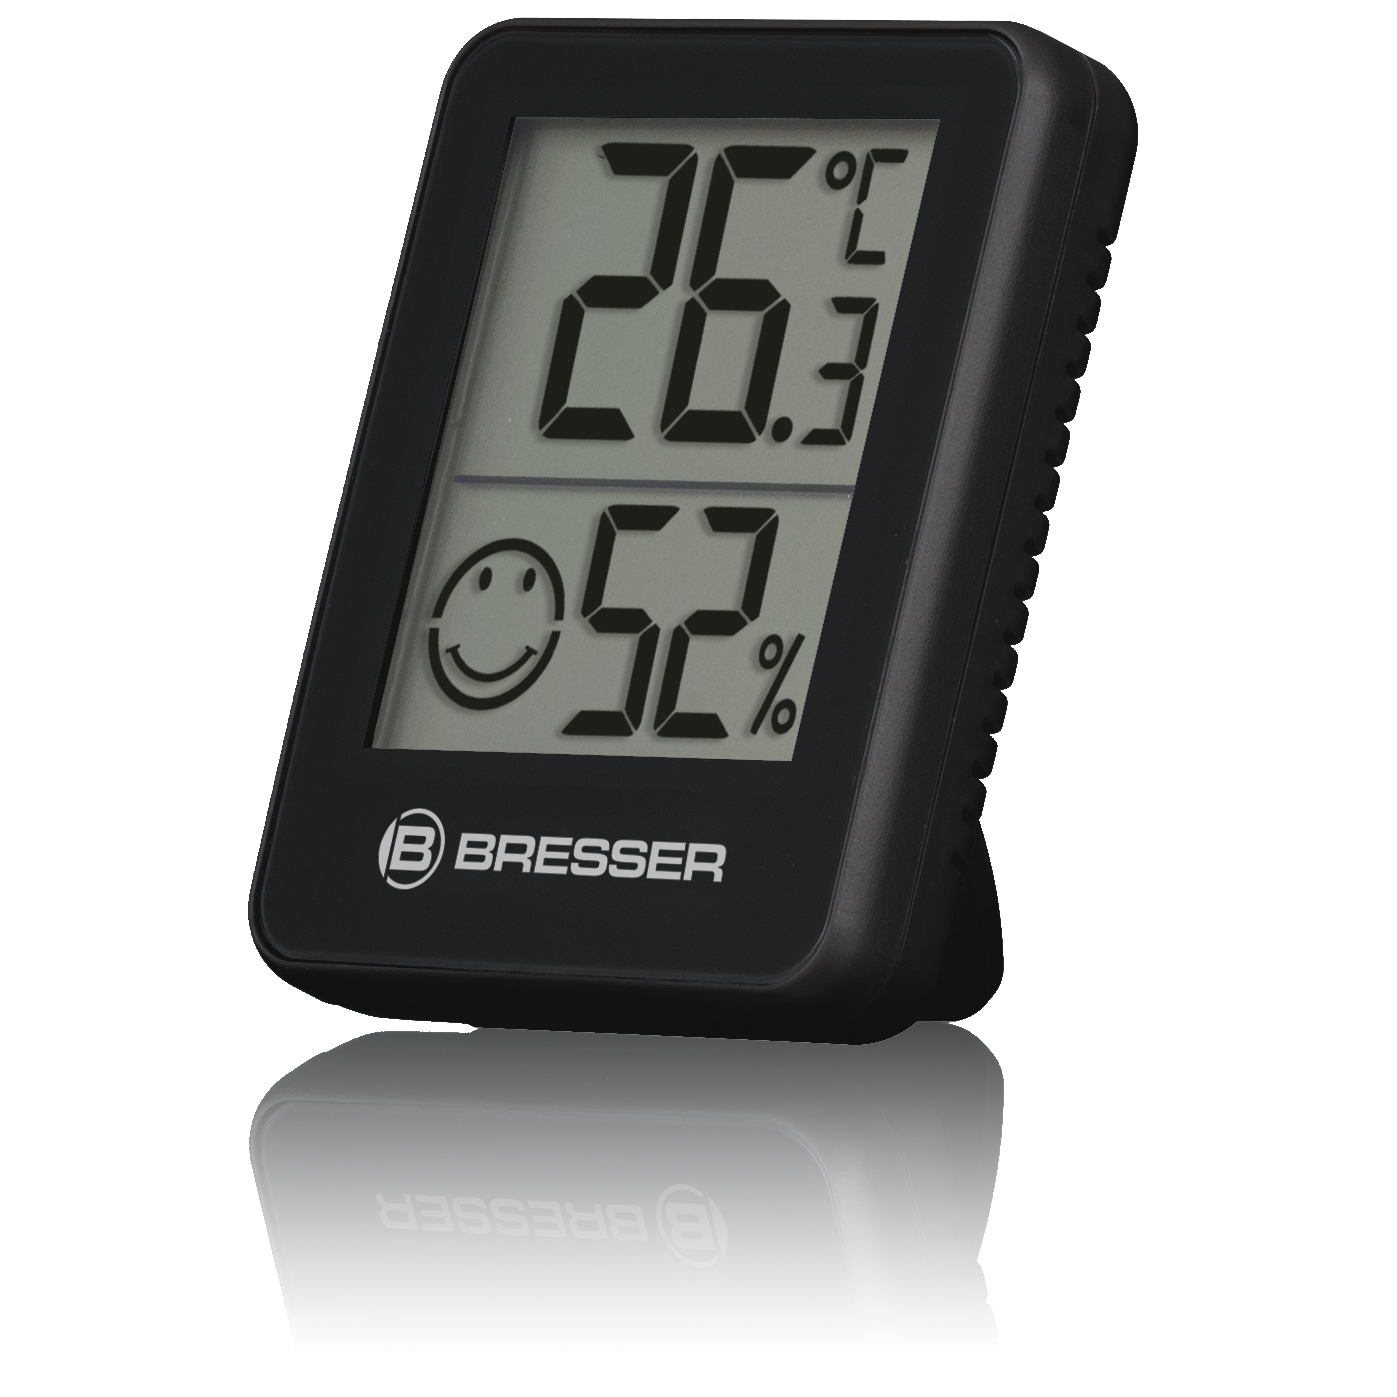 Thermo-/Hygrometer BRESSER Temeo 6er-Set Wetterstation Hygro Indikator